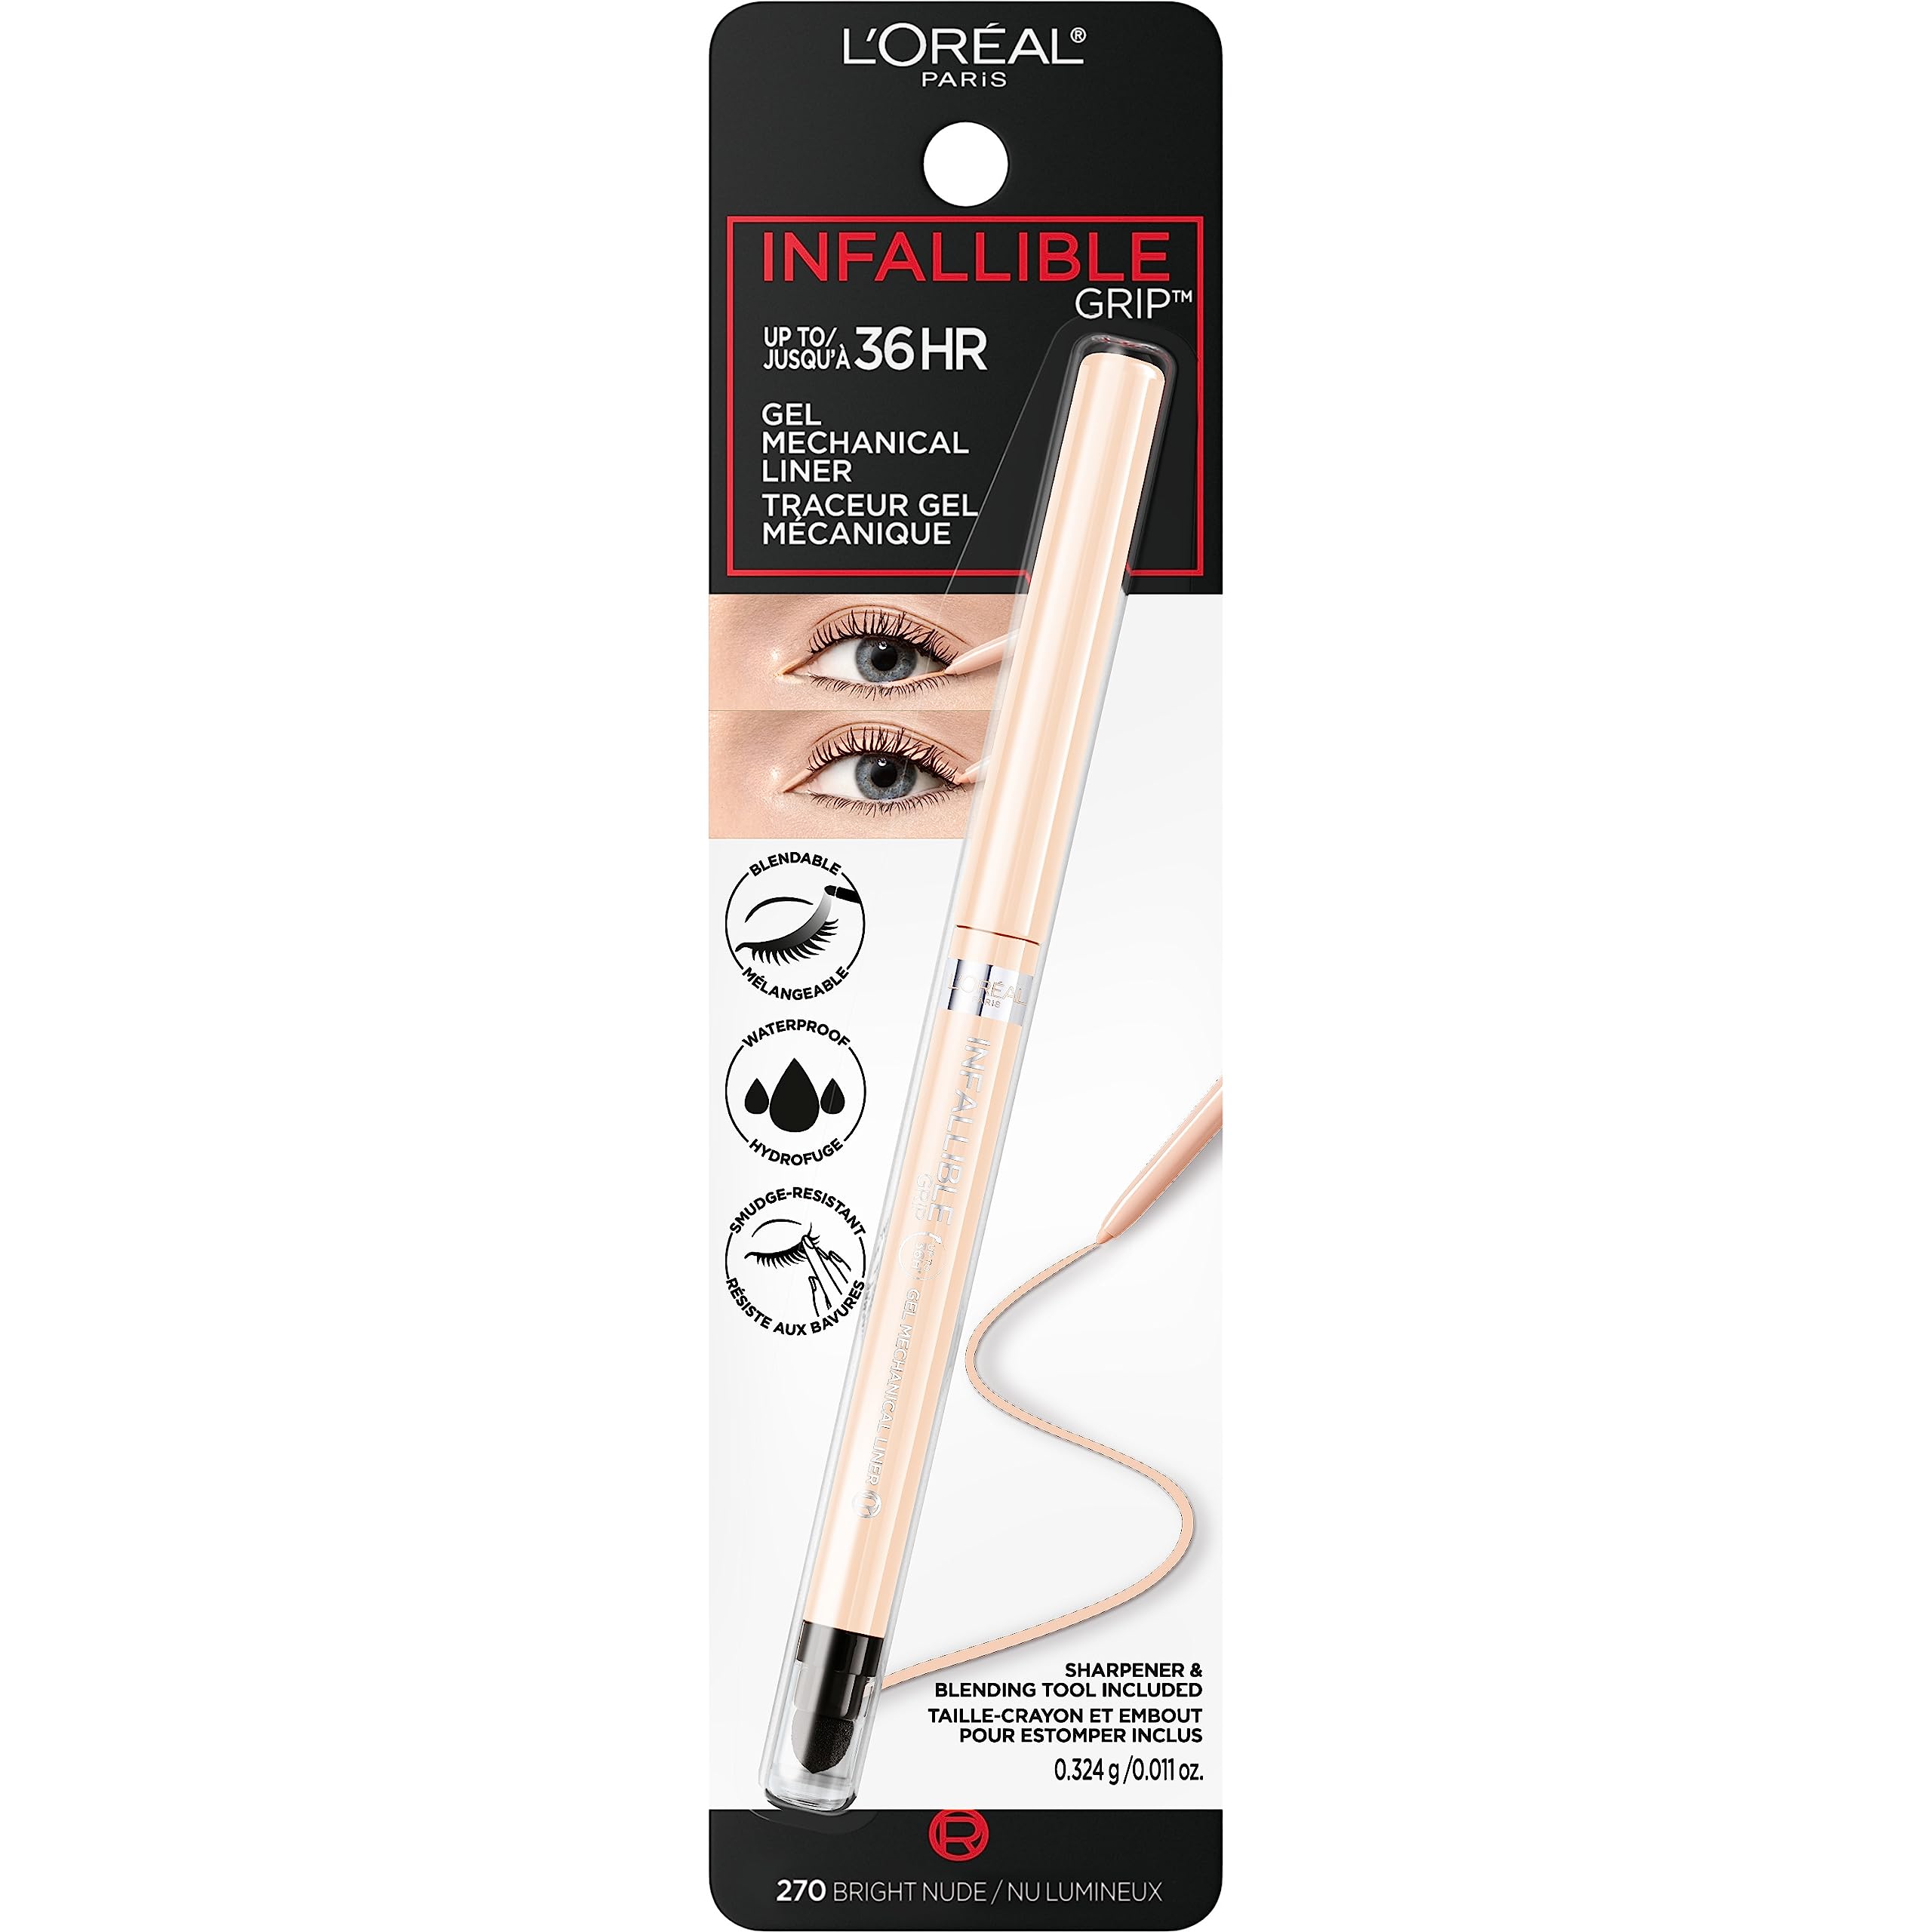 L'Oreal Paris Infallible Grip Mechanical Gel Eyeliner, Smudge-Resistant, Waterproof Eye Makeup with Up to 36HR Wear, Bright Nude, 0.01 Oz